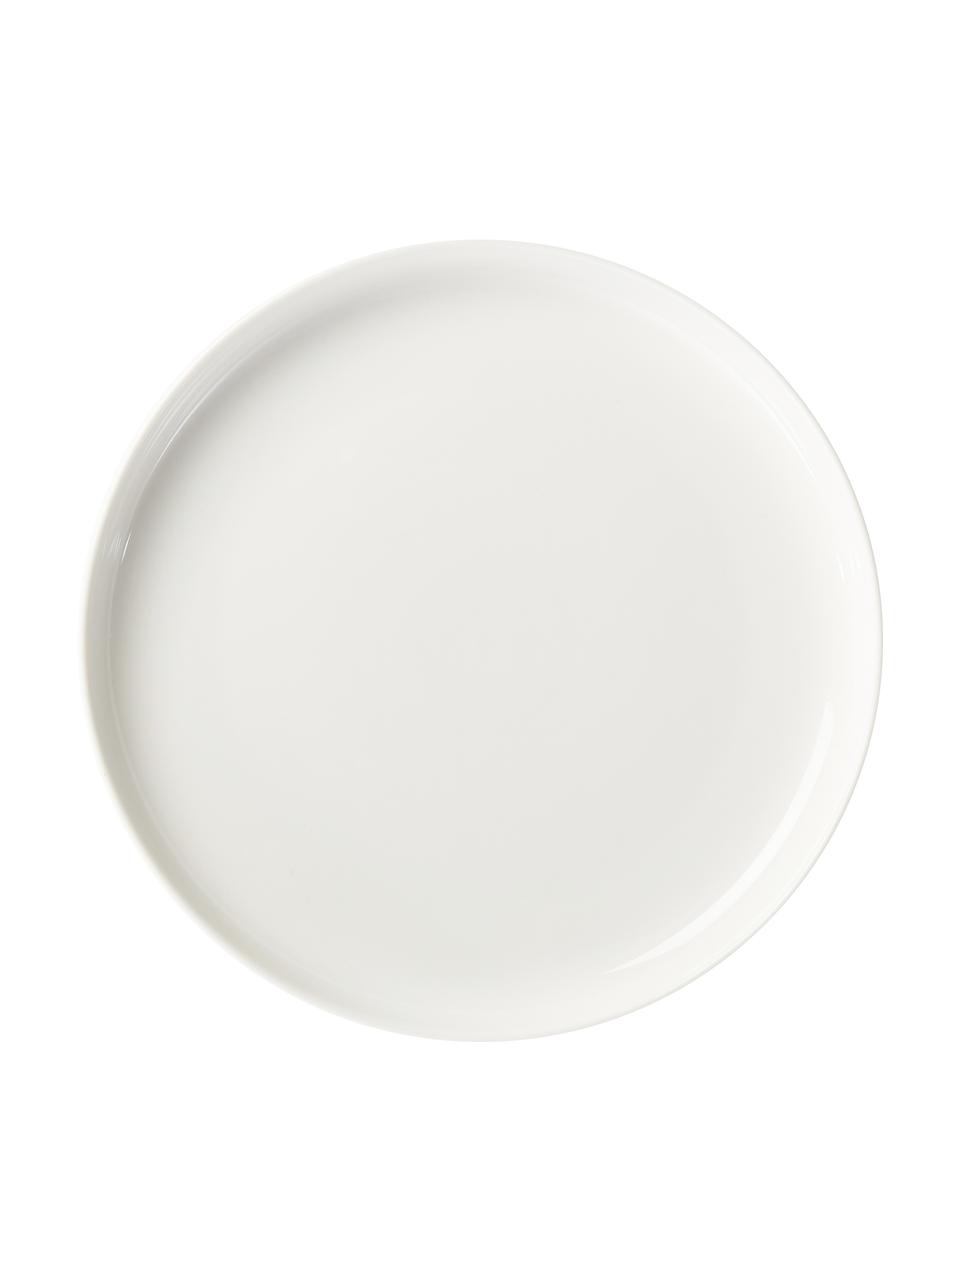 Set 12 piatti in porcellana Nessa, 4 persone, Porcellana a pasta dura di alta qualità, Bianco, Set in varie misure